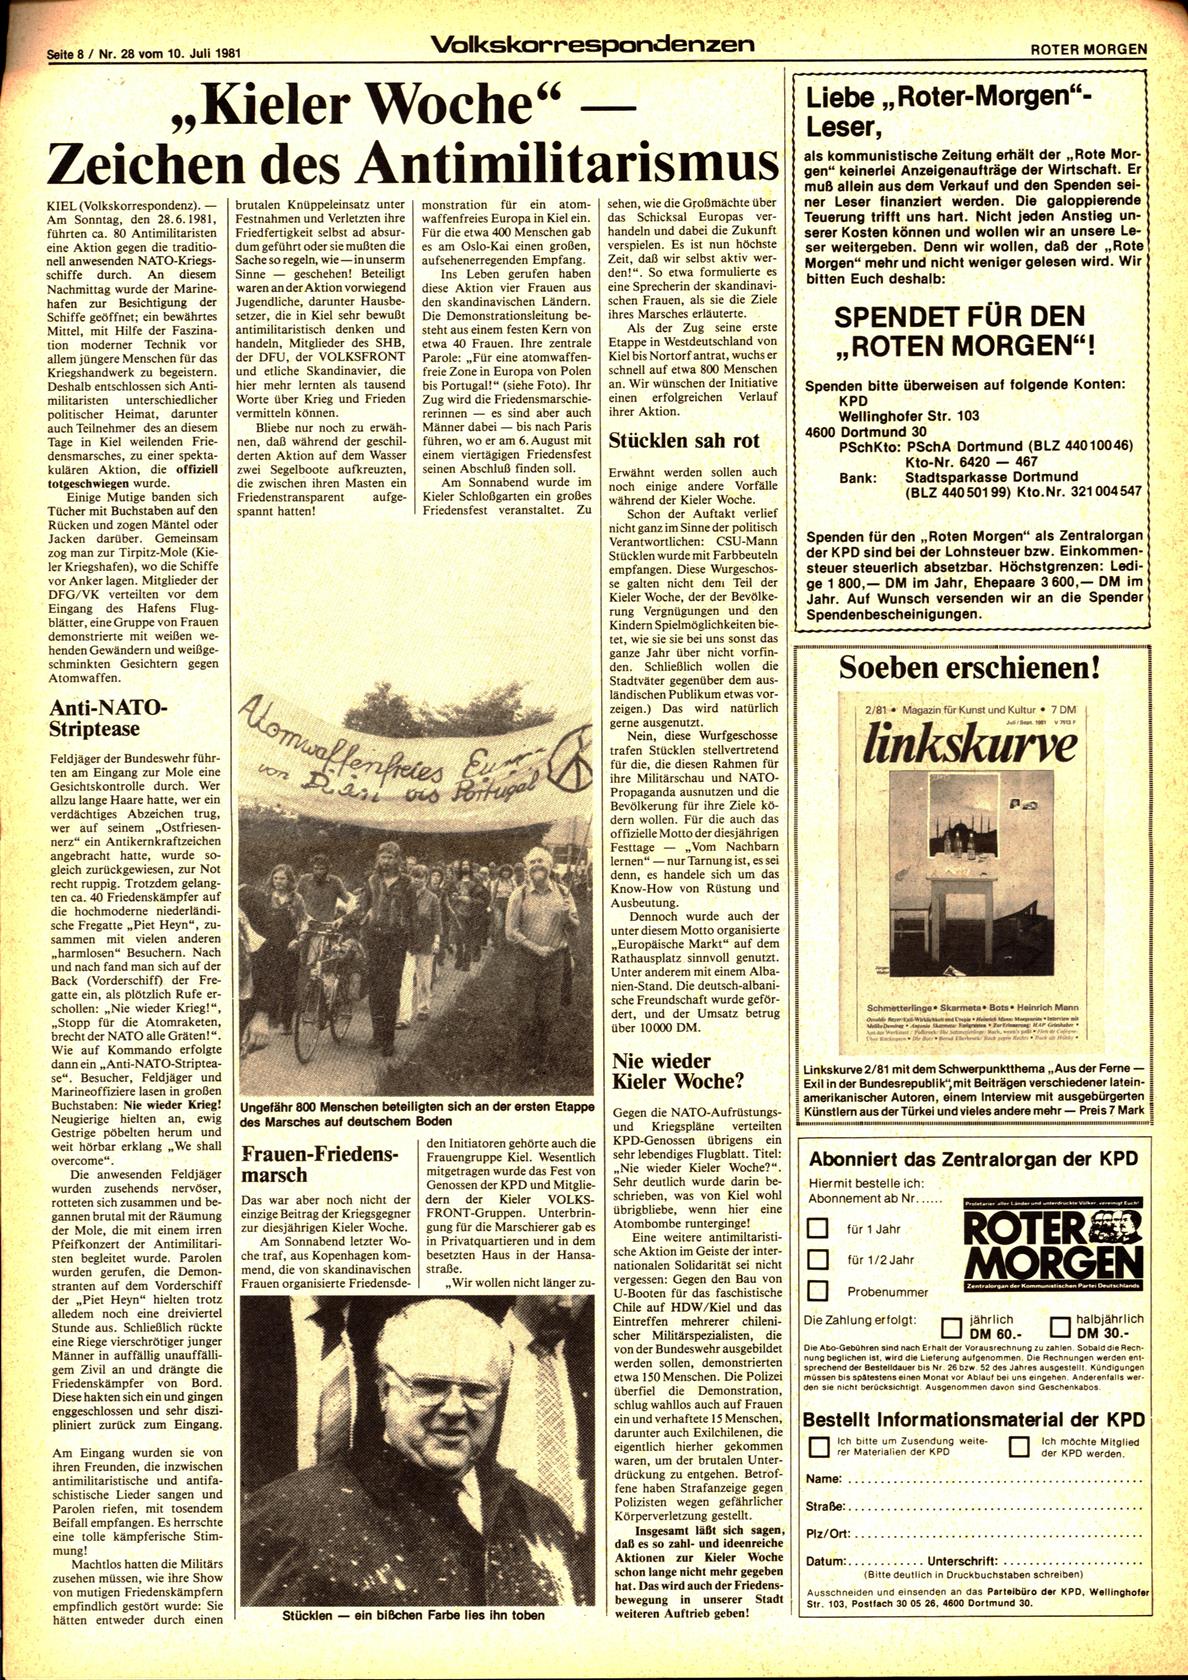 Roter Morgen, 15. Jg., 10. Juli 1981, Nr. 28, Seite 8